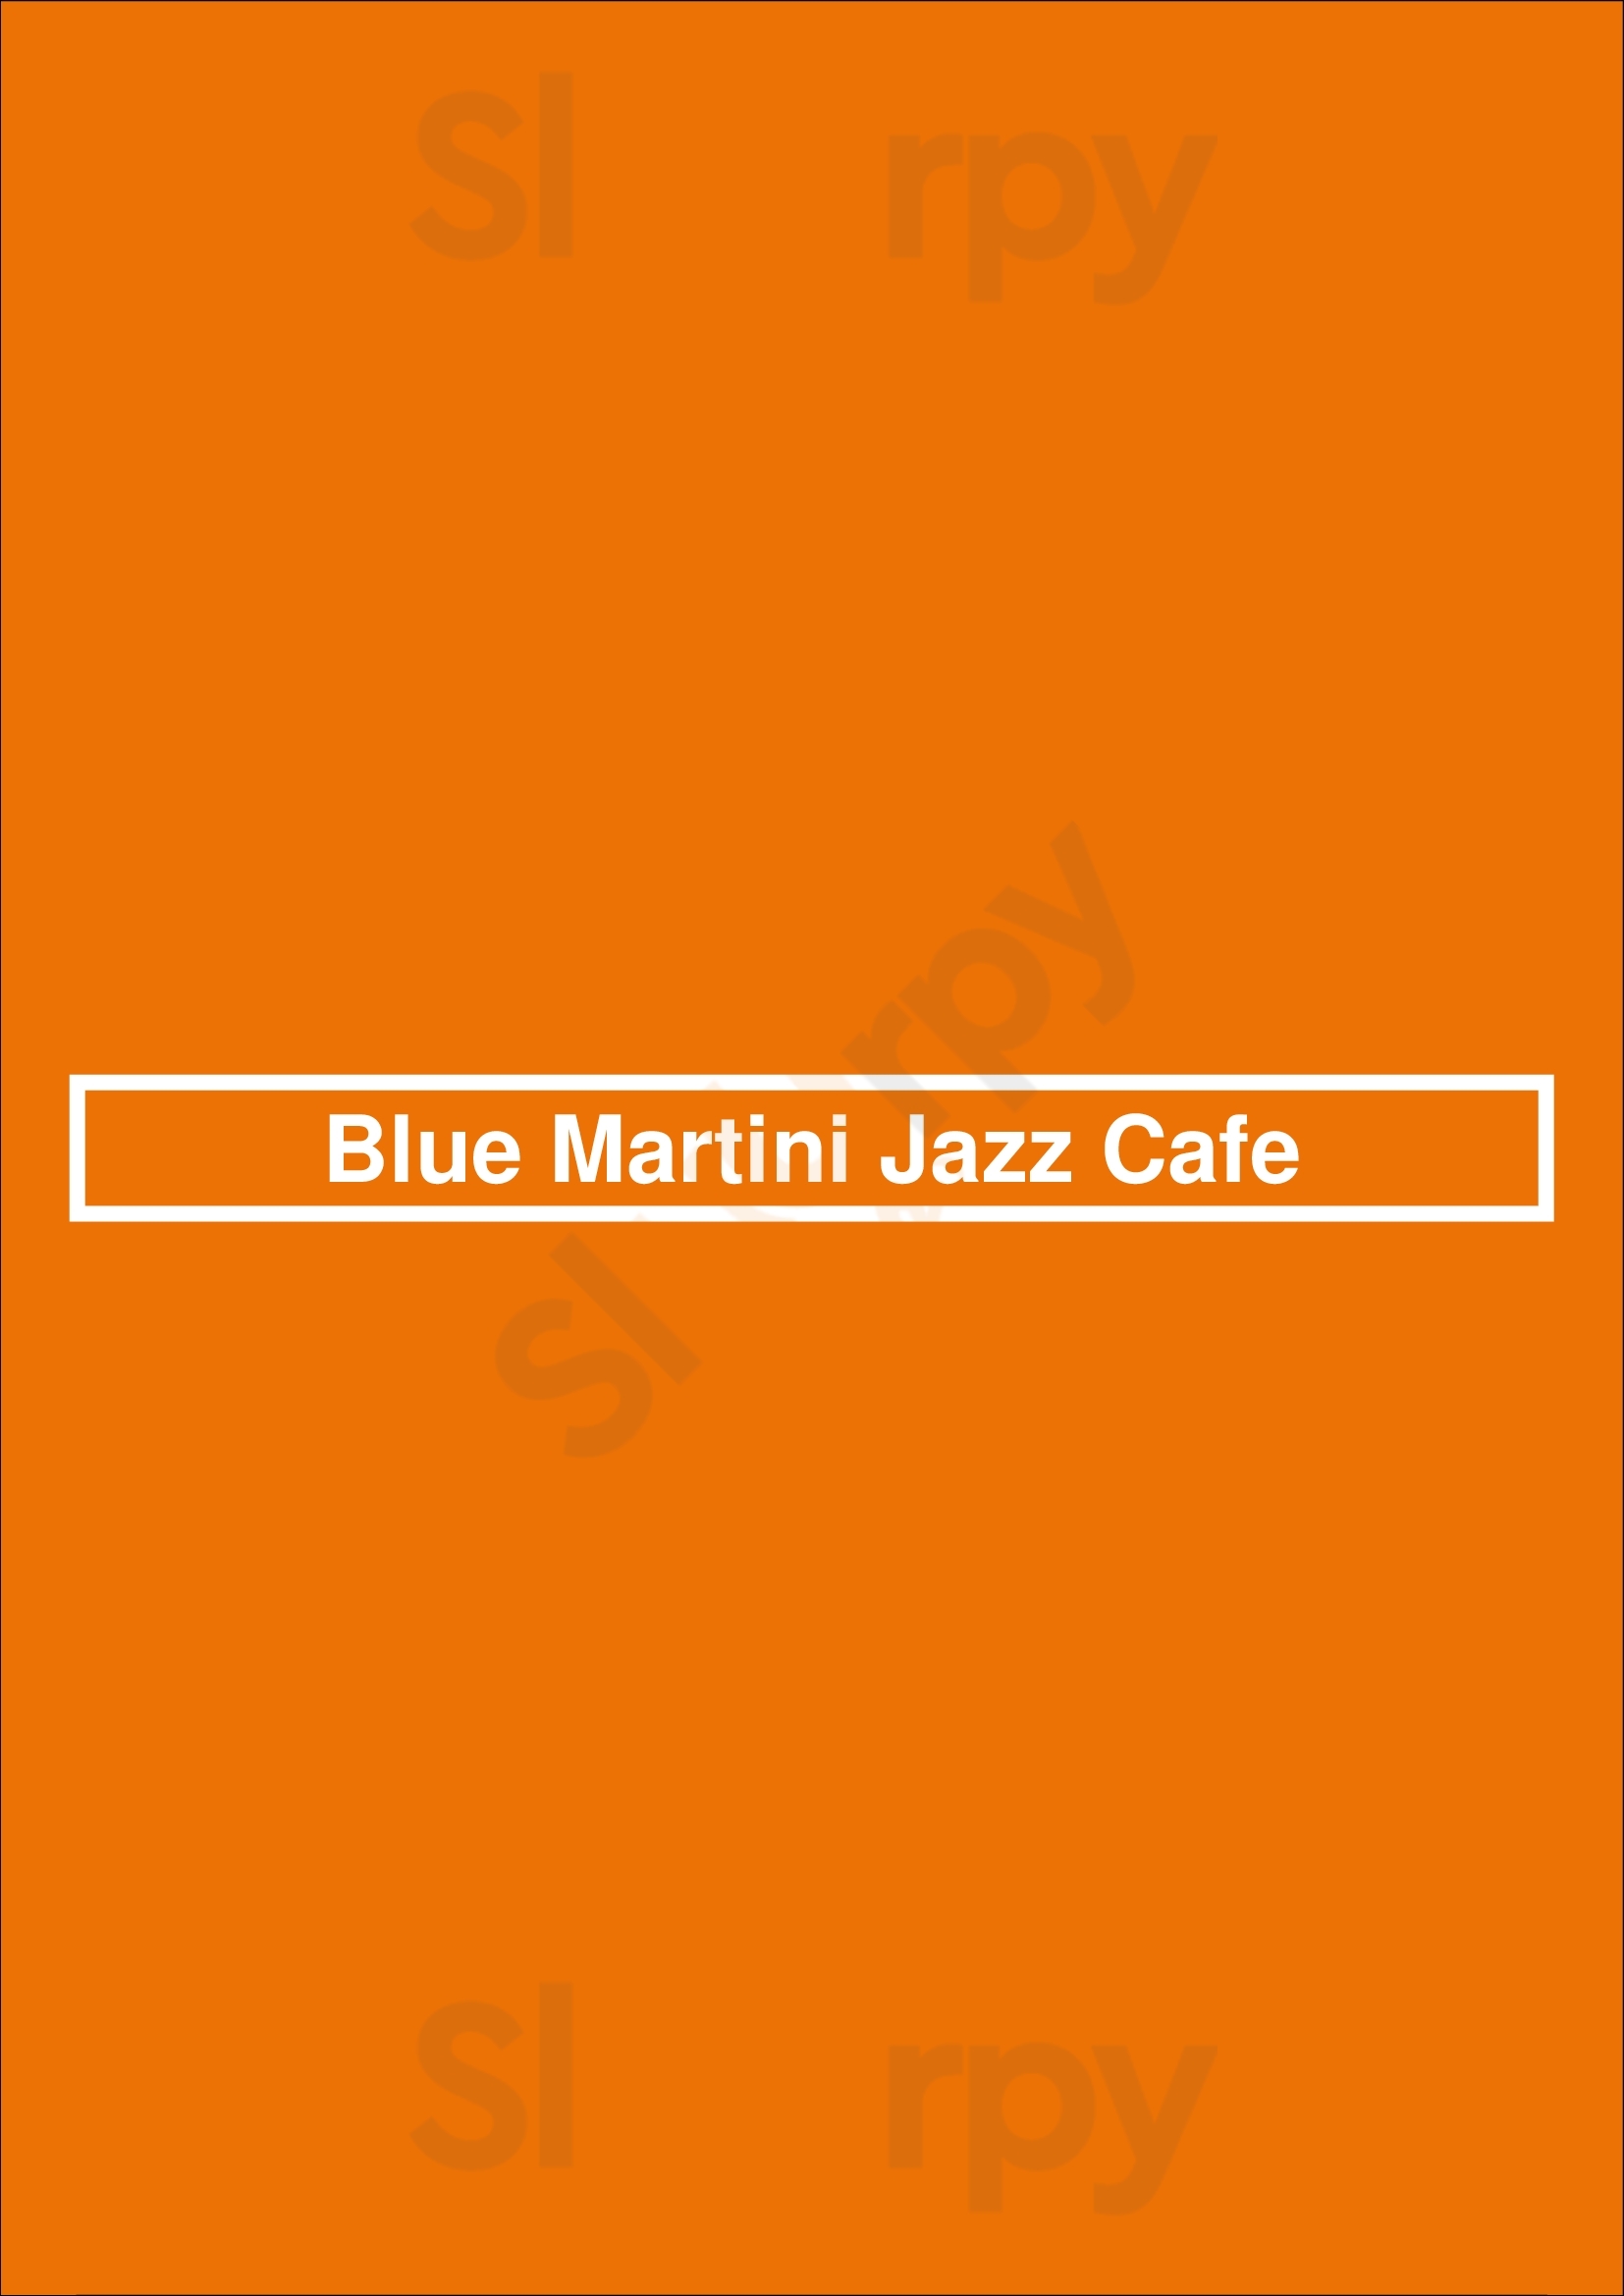 Blue Martini Jazz Cafe Vancouver Menu - 1